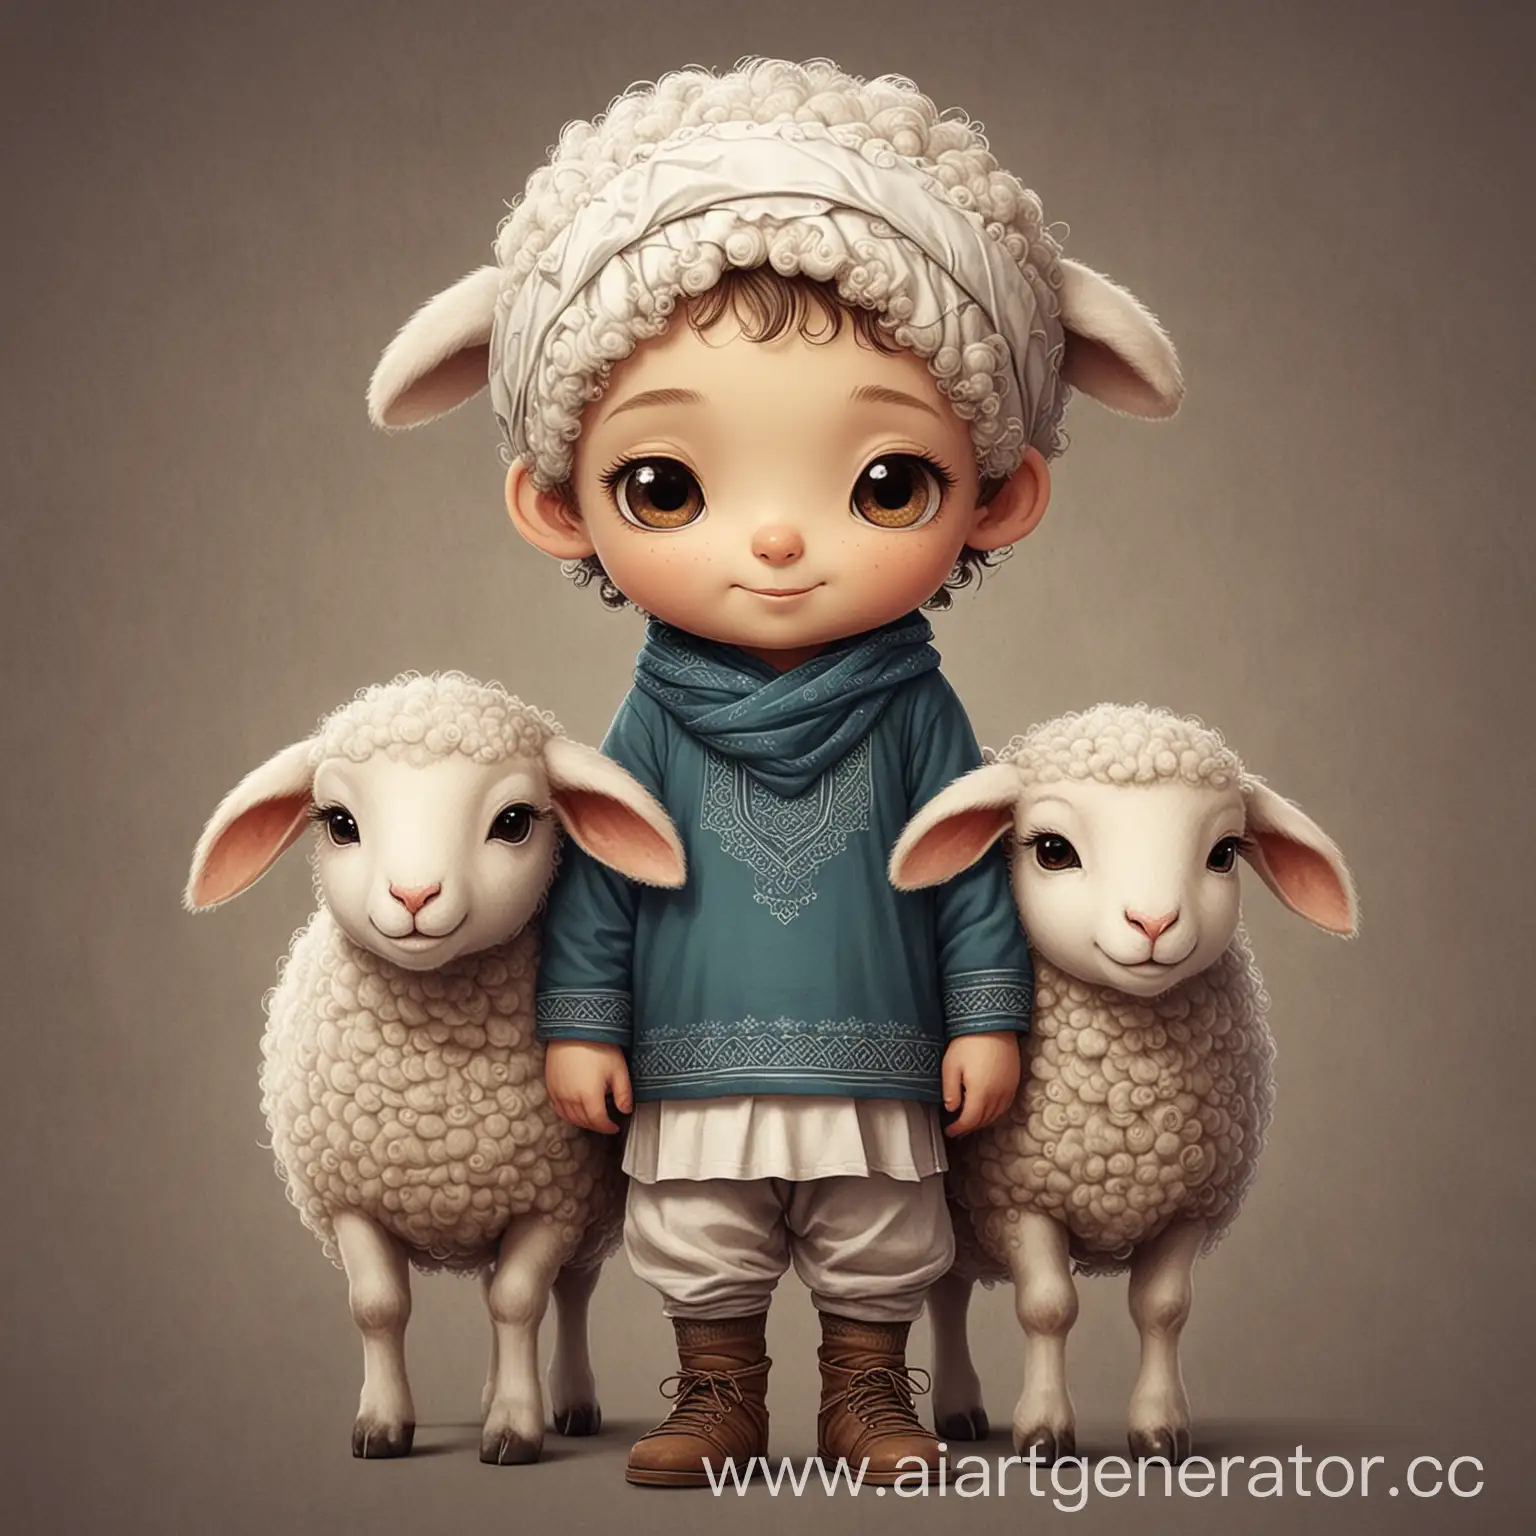 Islamic-Boy-and-Sheep-in-Peaceful-Islamic-Setting